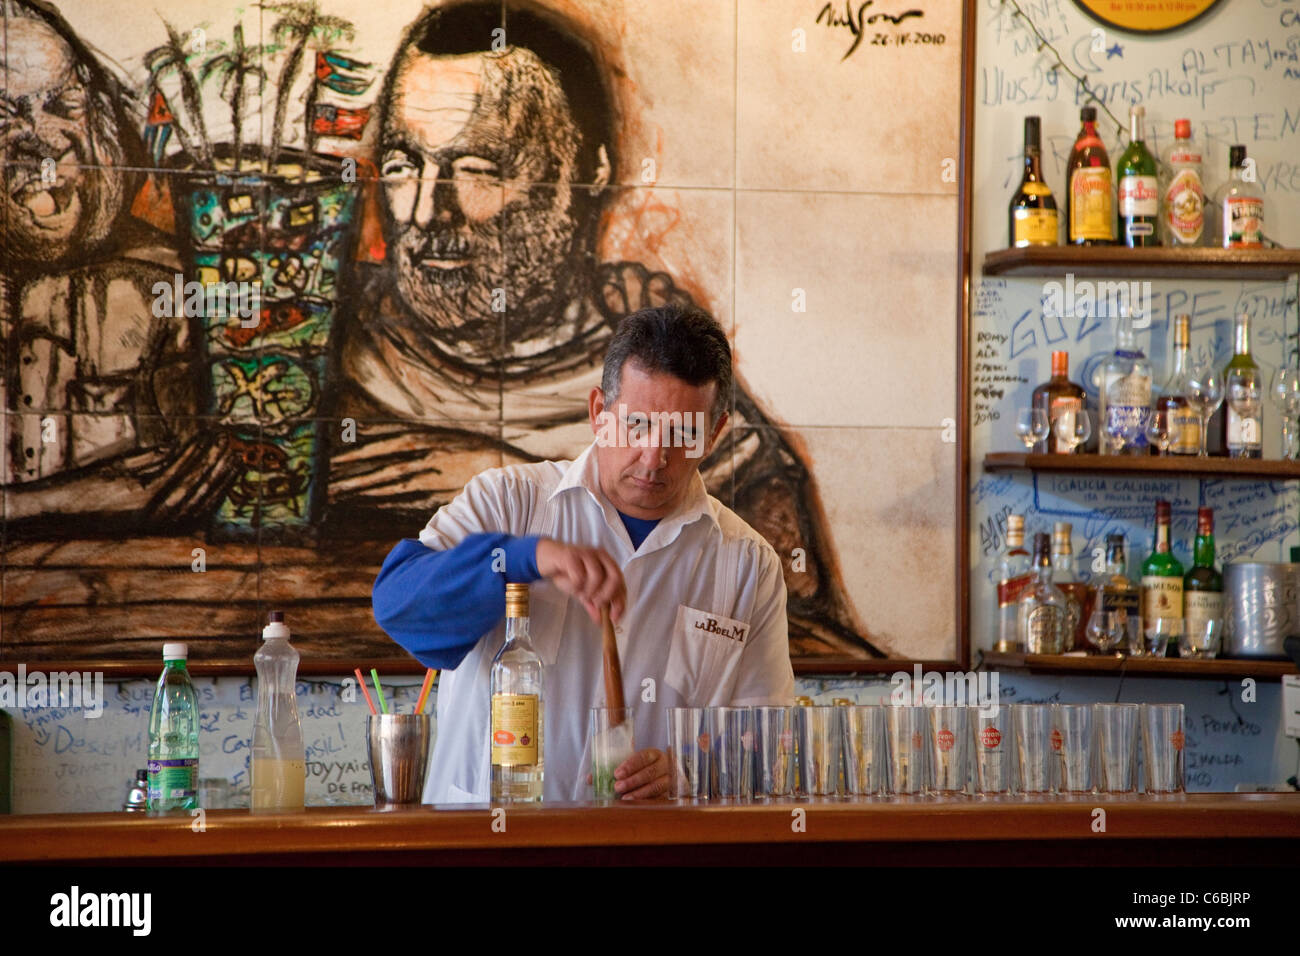 Cuba, Havana. La Bodeguita del Medio. Bartender at Work. Stock Photo